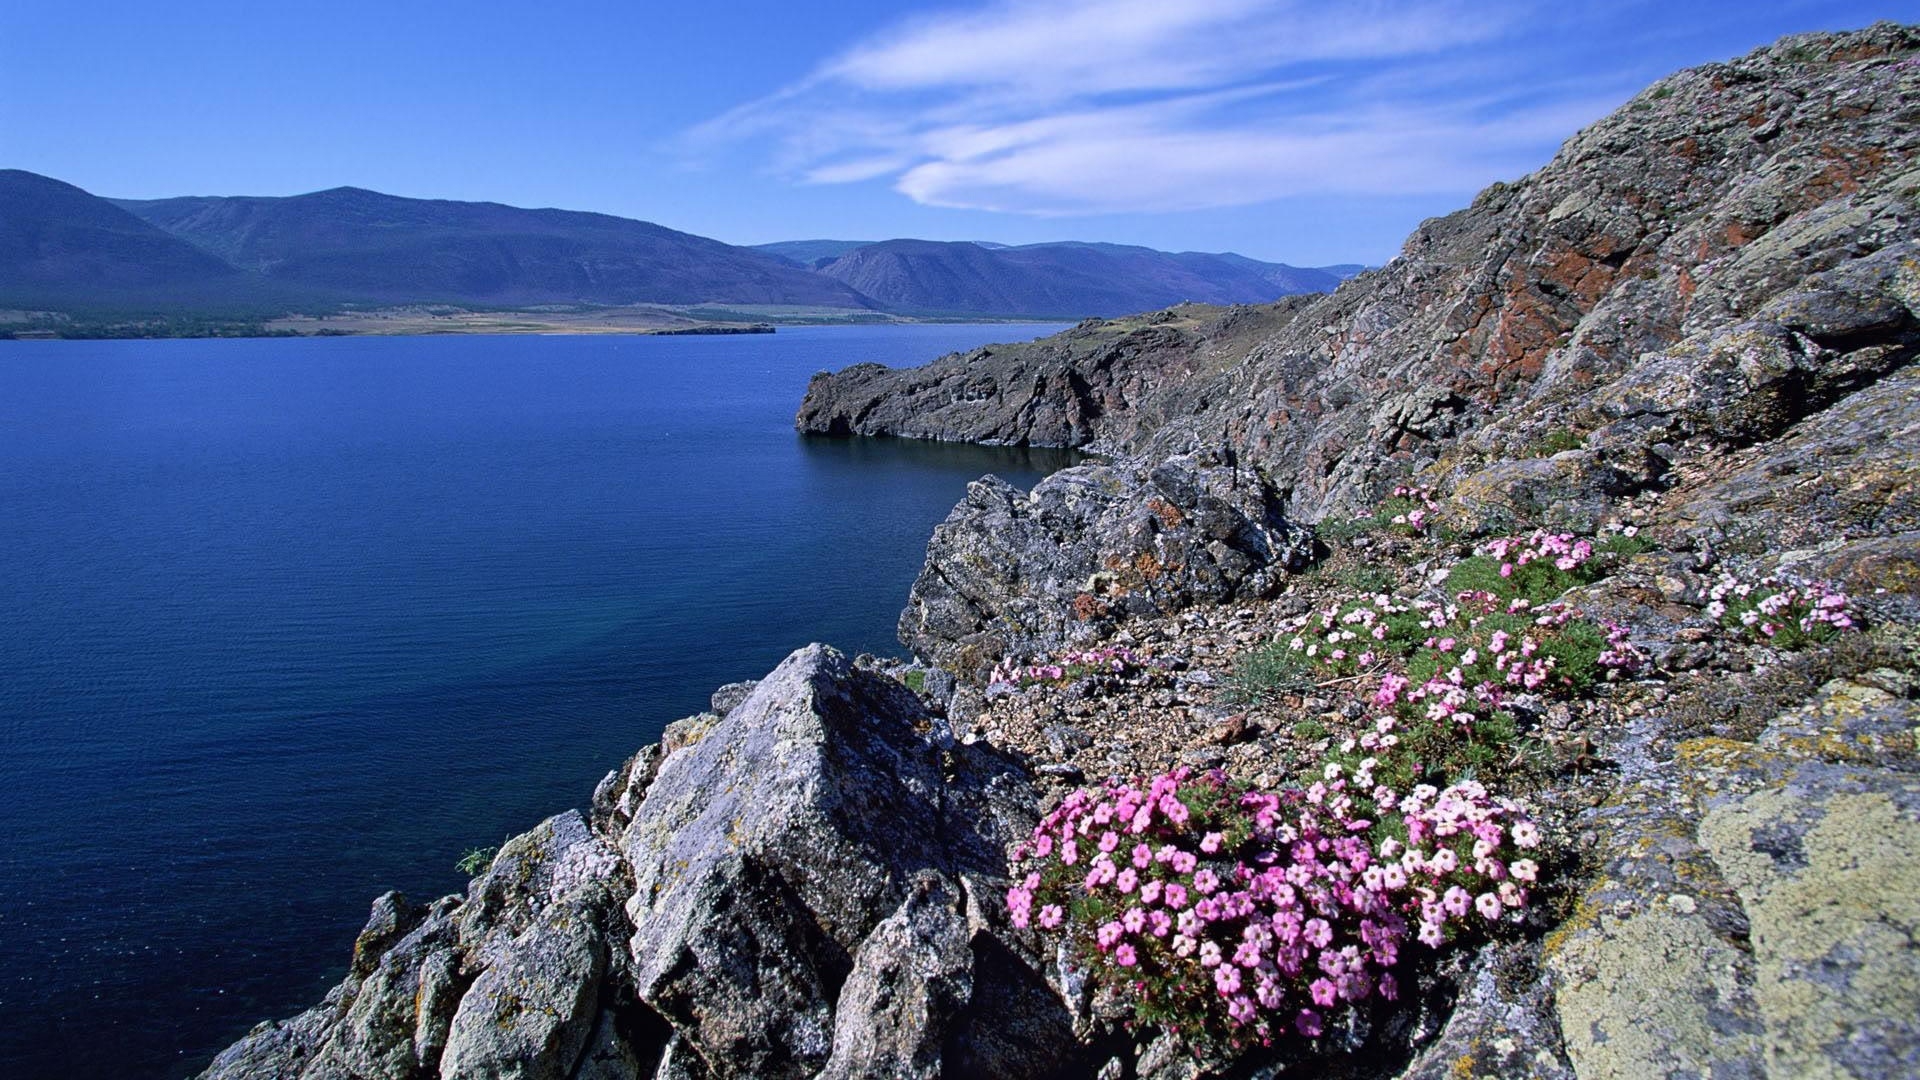 Rocky Shoreline Barakchin Island Lake Baikal for 1920 x 1080 HDTV 1080p resolution